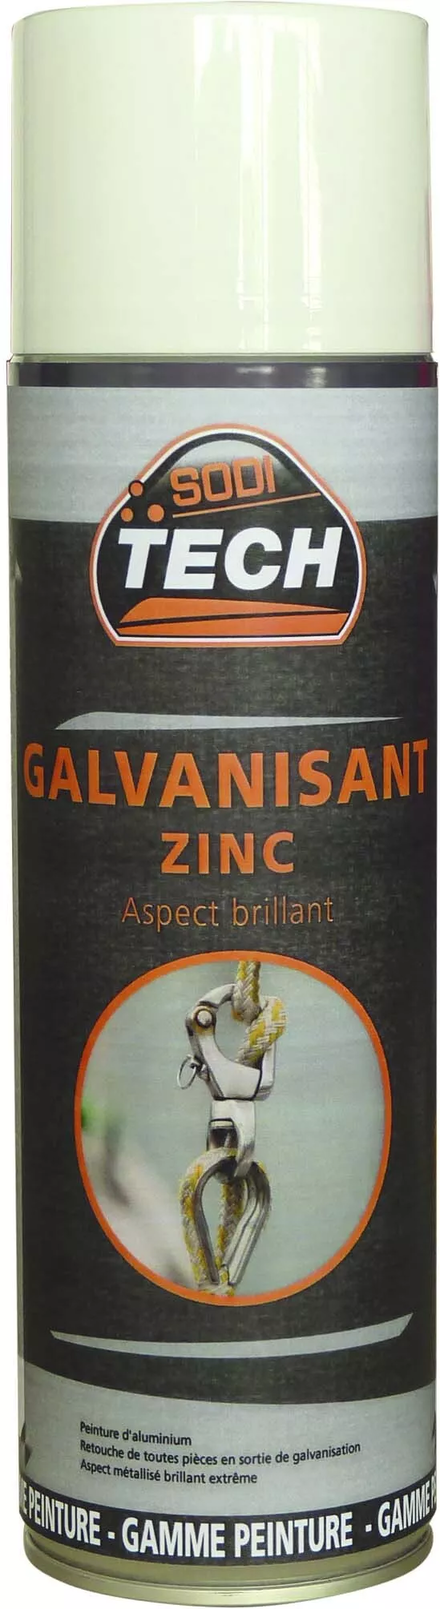 Galvanisant zinc aspect brillant 500ml SODITECH - 10170